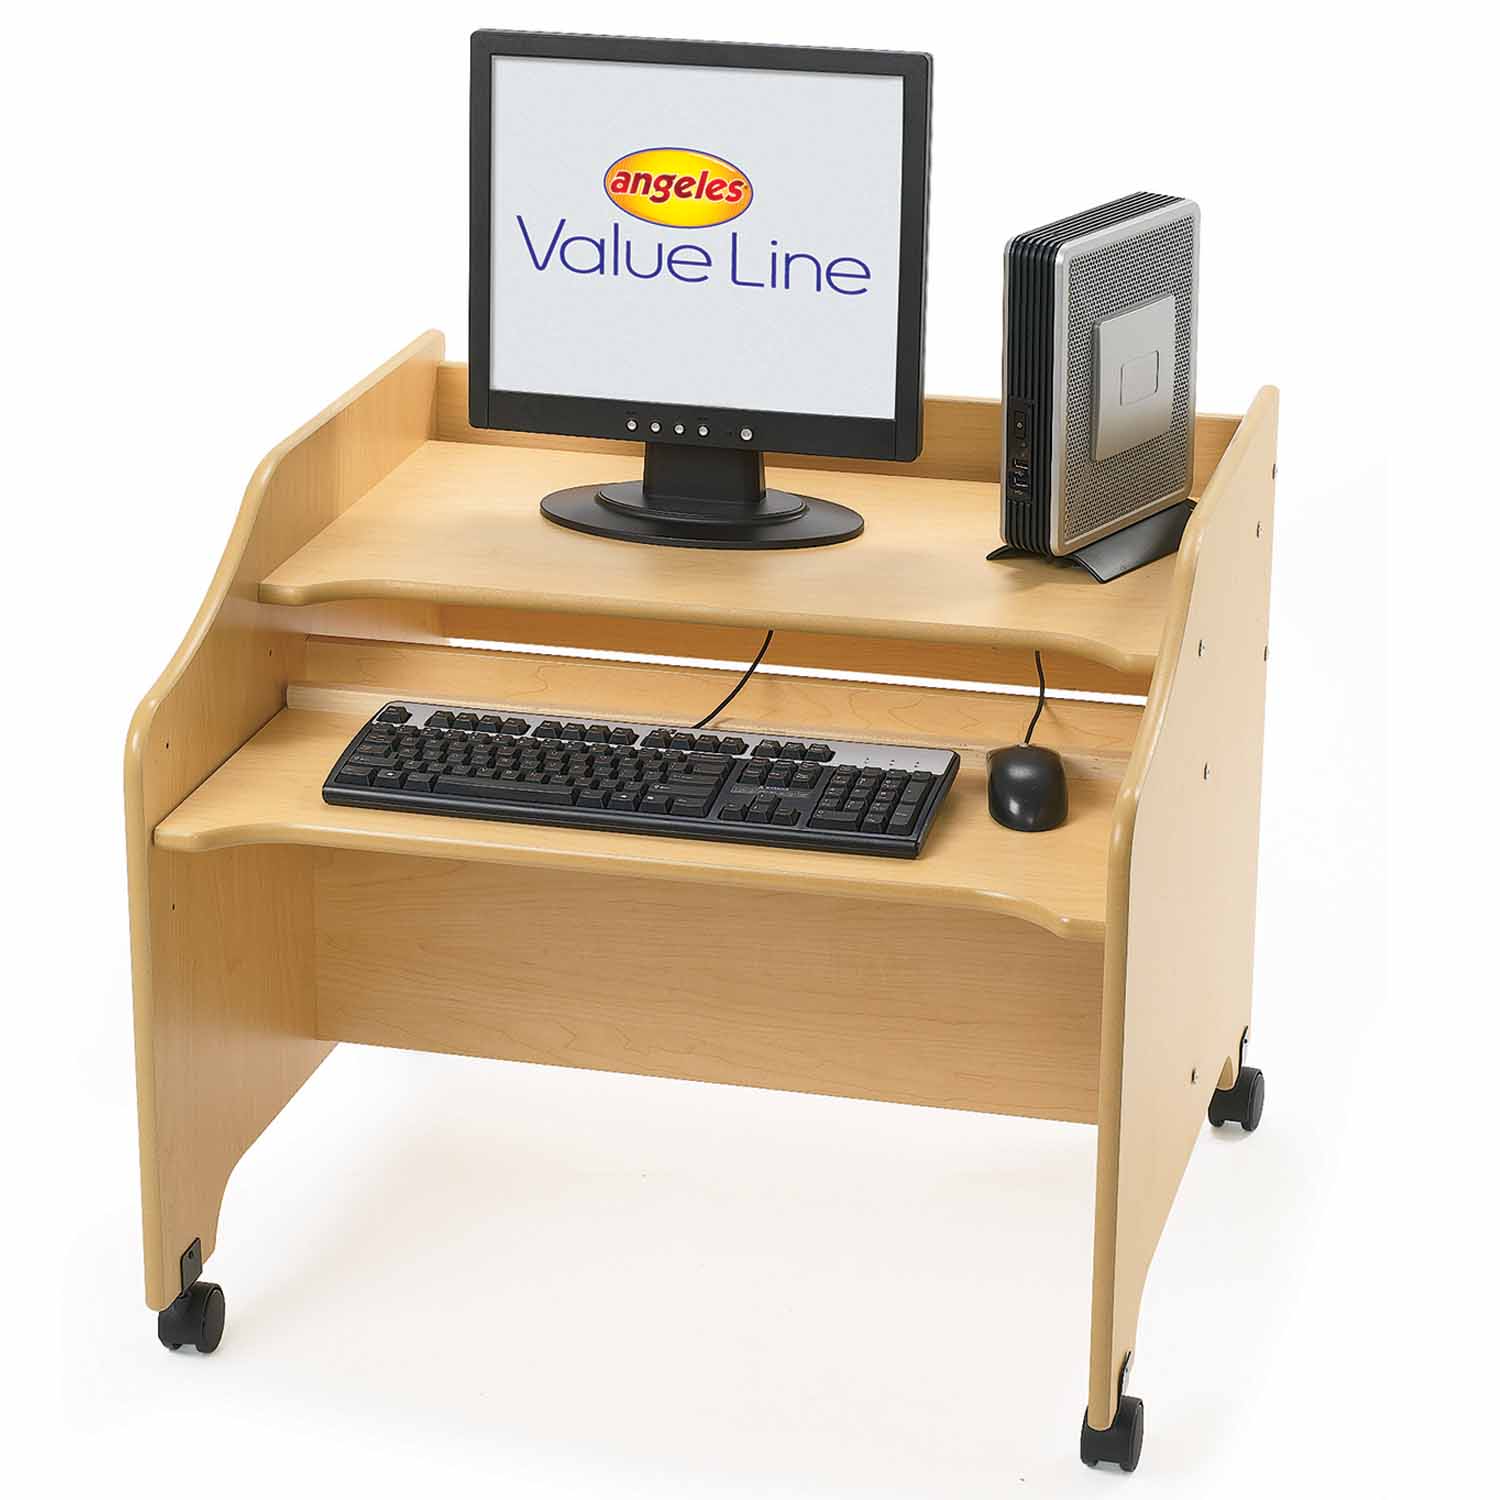 Value Line™ Single Computer Station